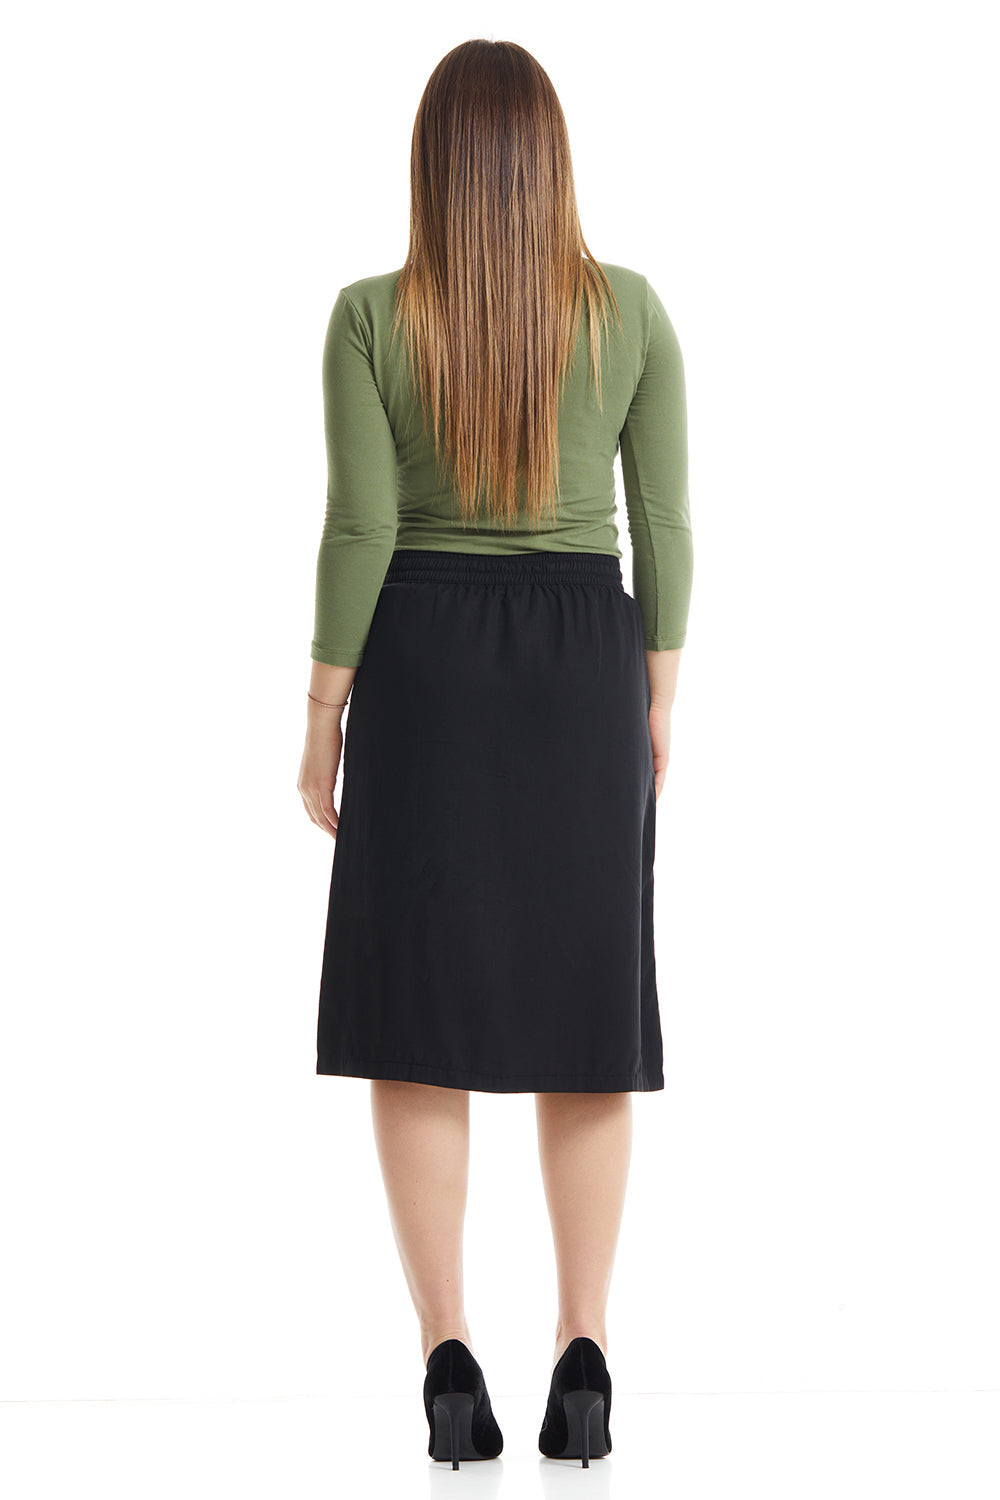 black knee length skirt with pockets